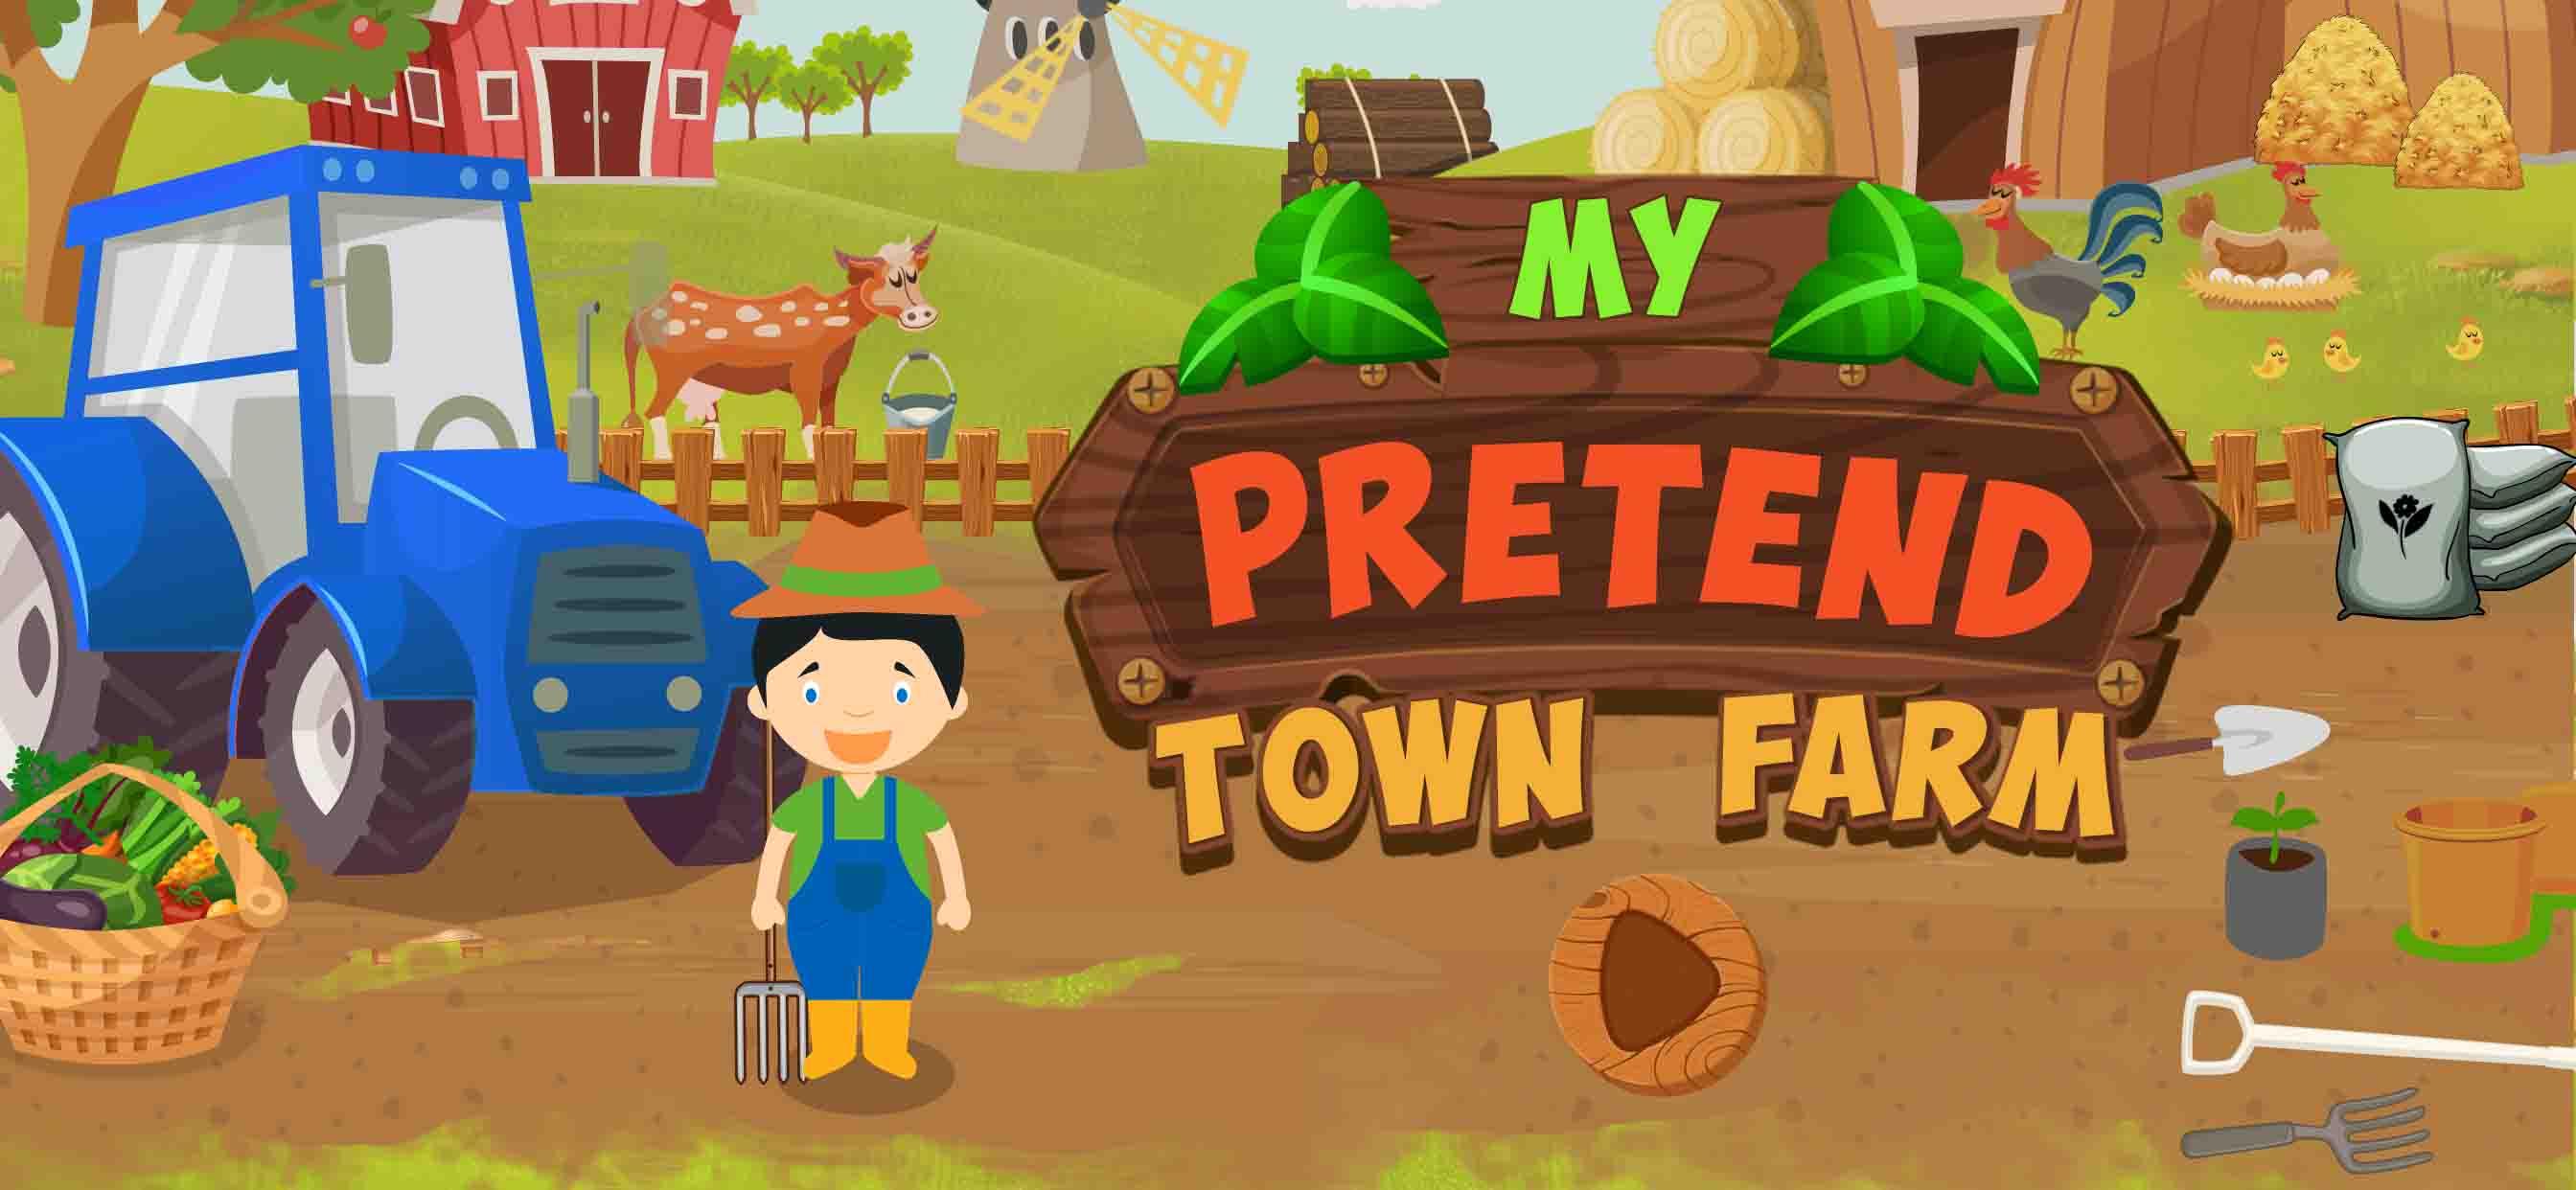 Pretend Town Farm House: Explore Farming World 1.1 Screenshot 12